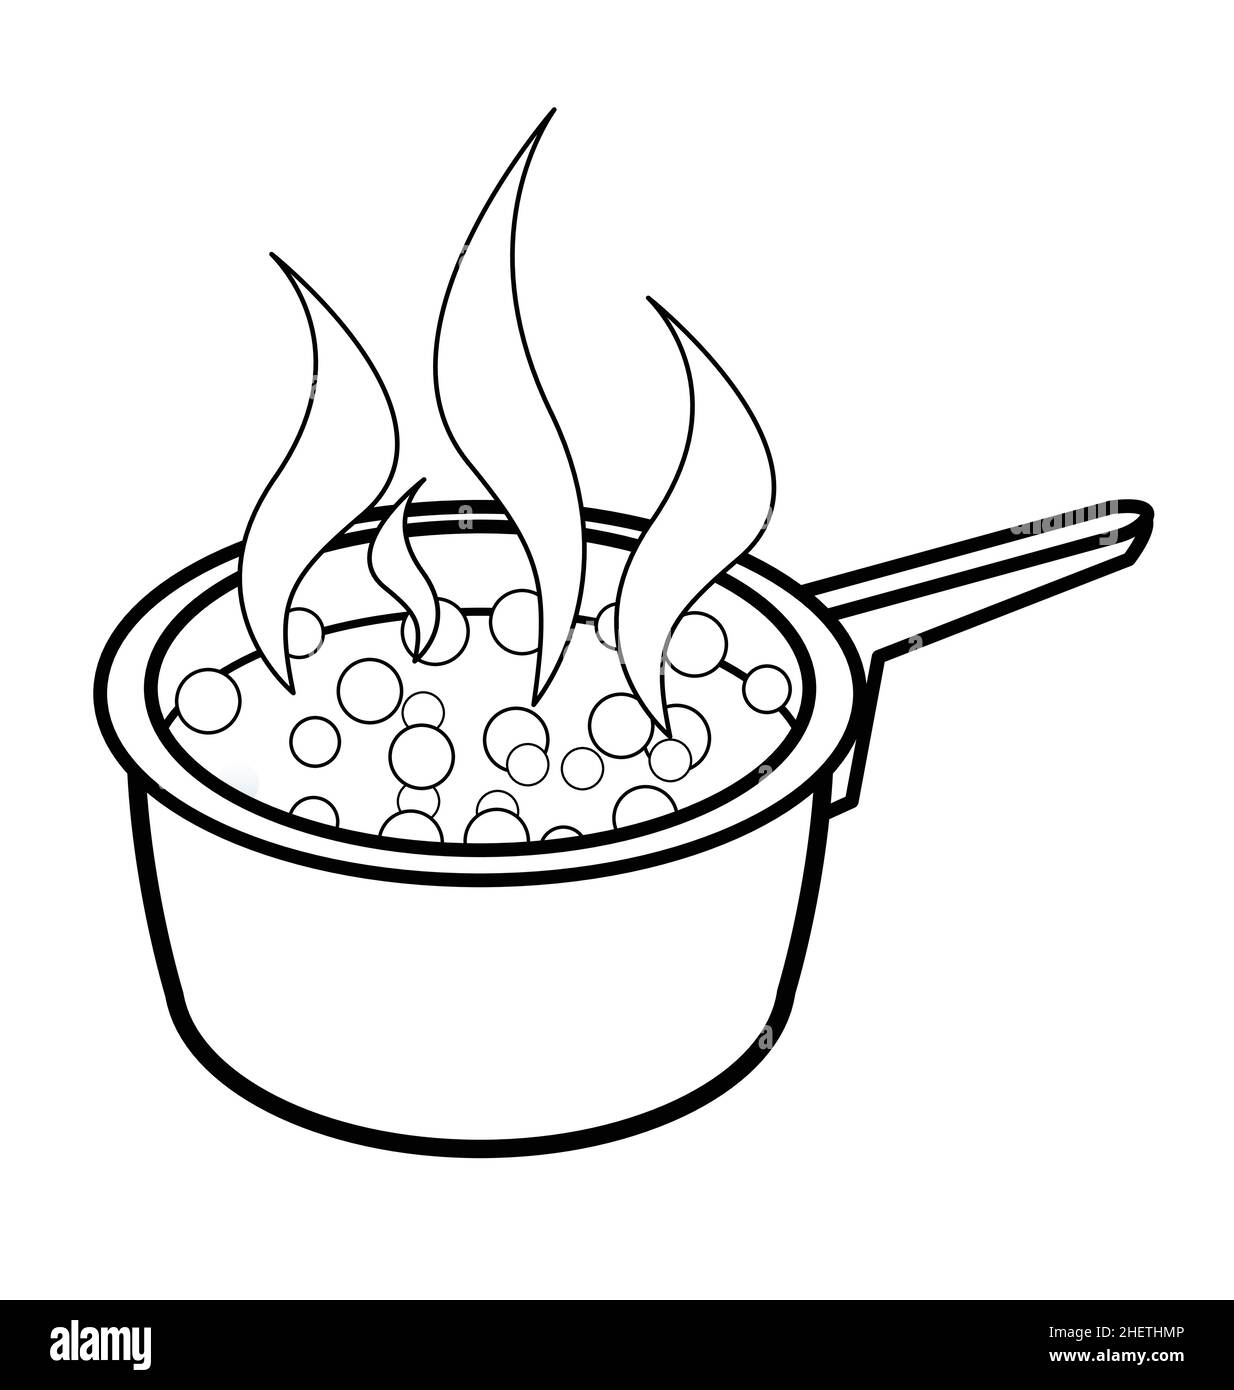 Boiling water in pan. Big black pot. Vector flat cartoon illustration Stock  Vector